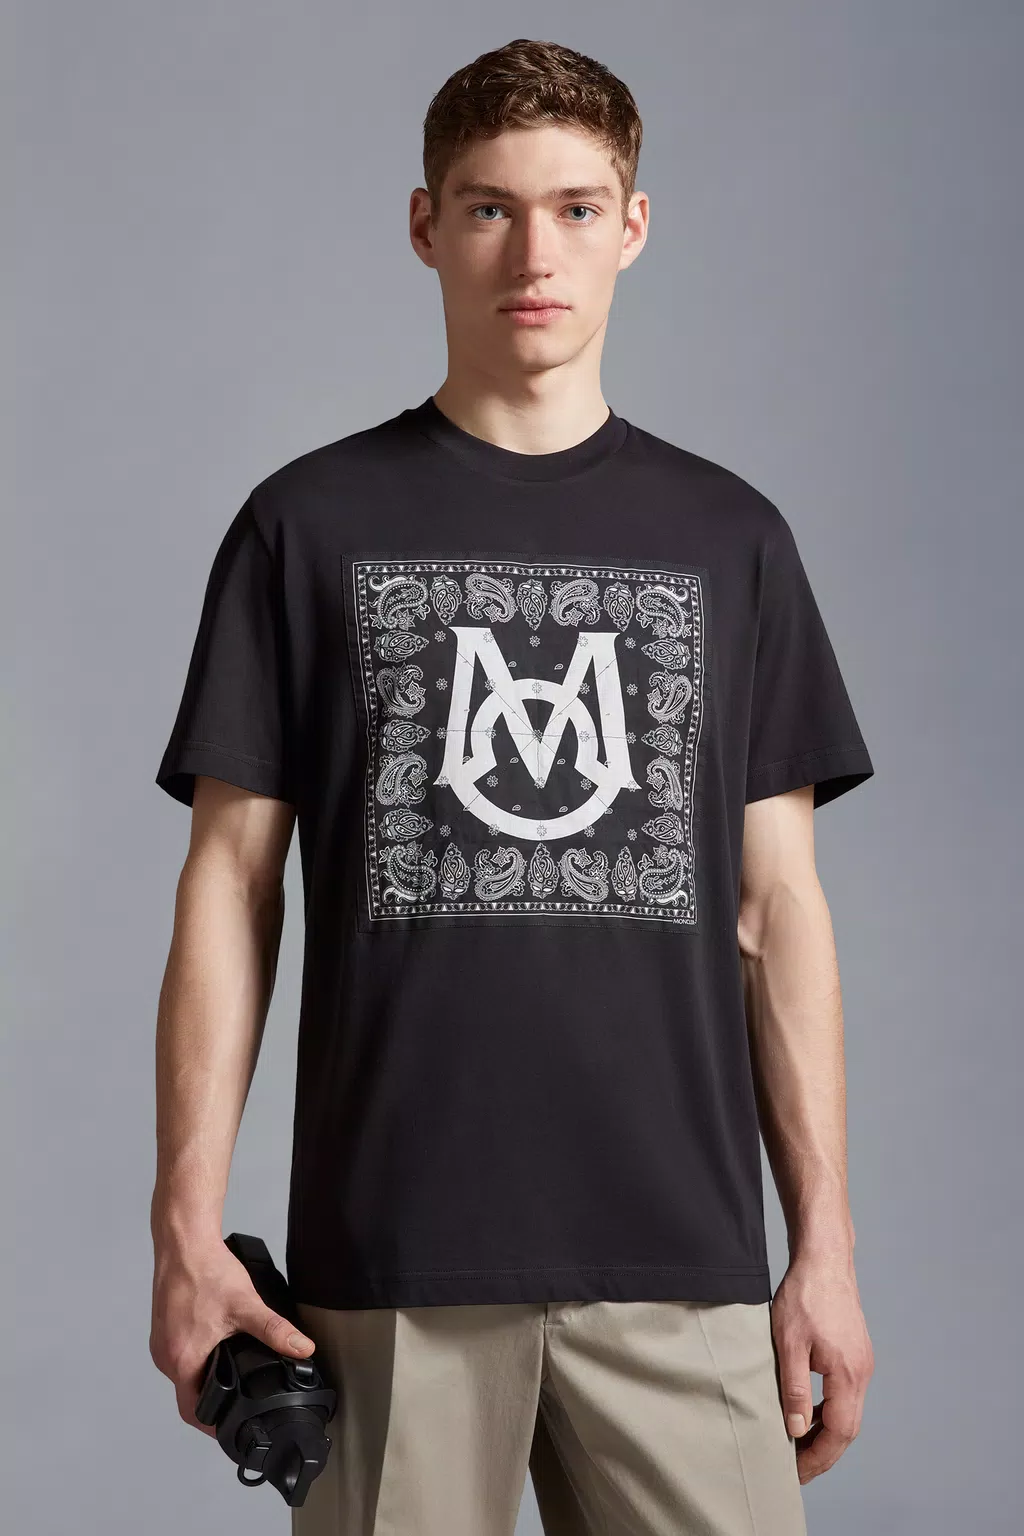 Moncler Men's Pocket T-Shirt